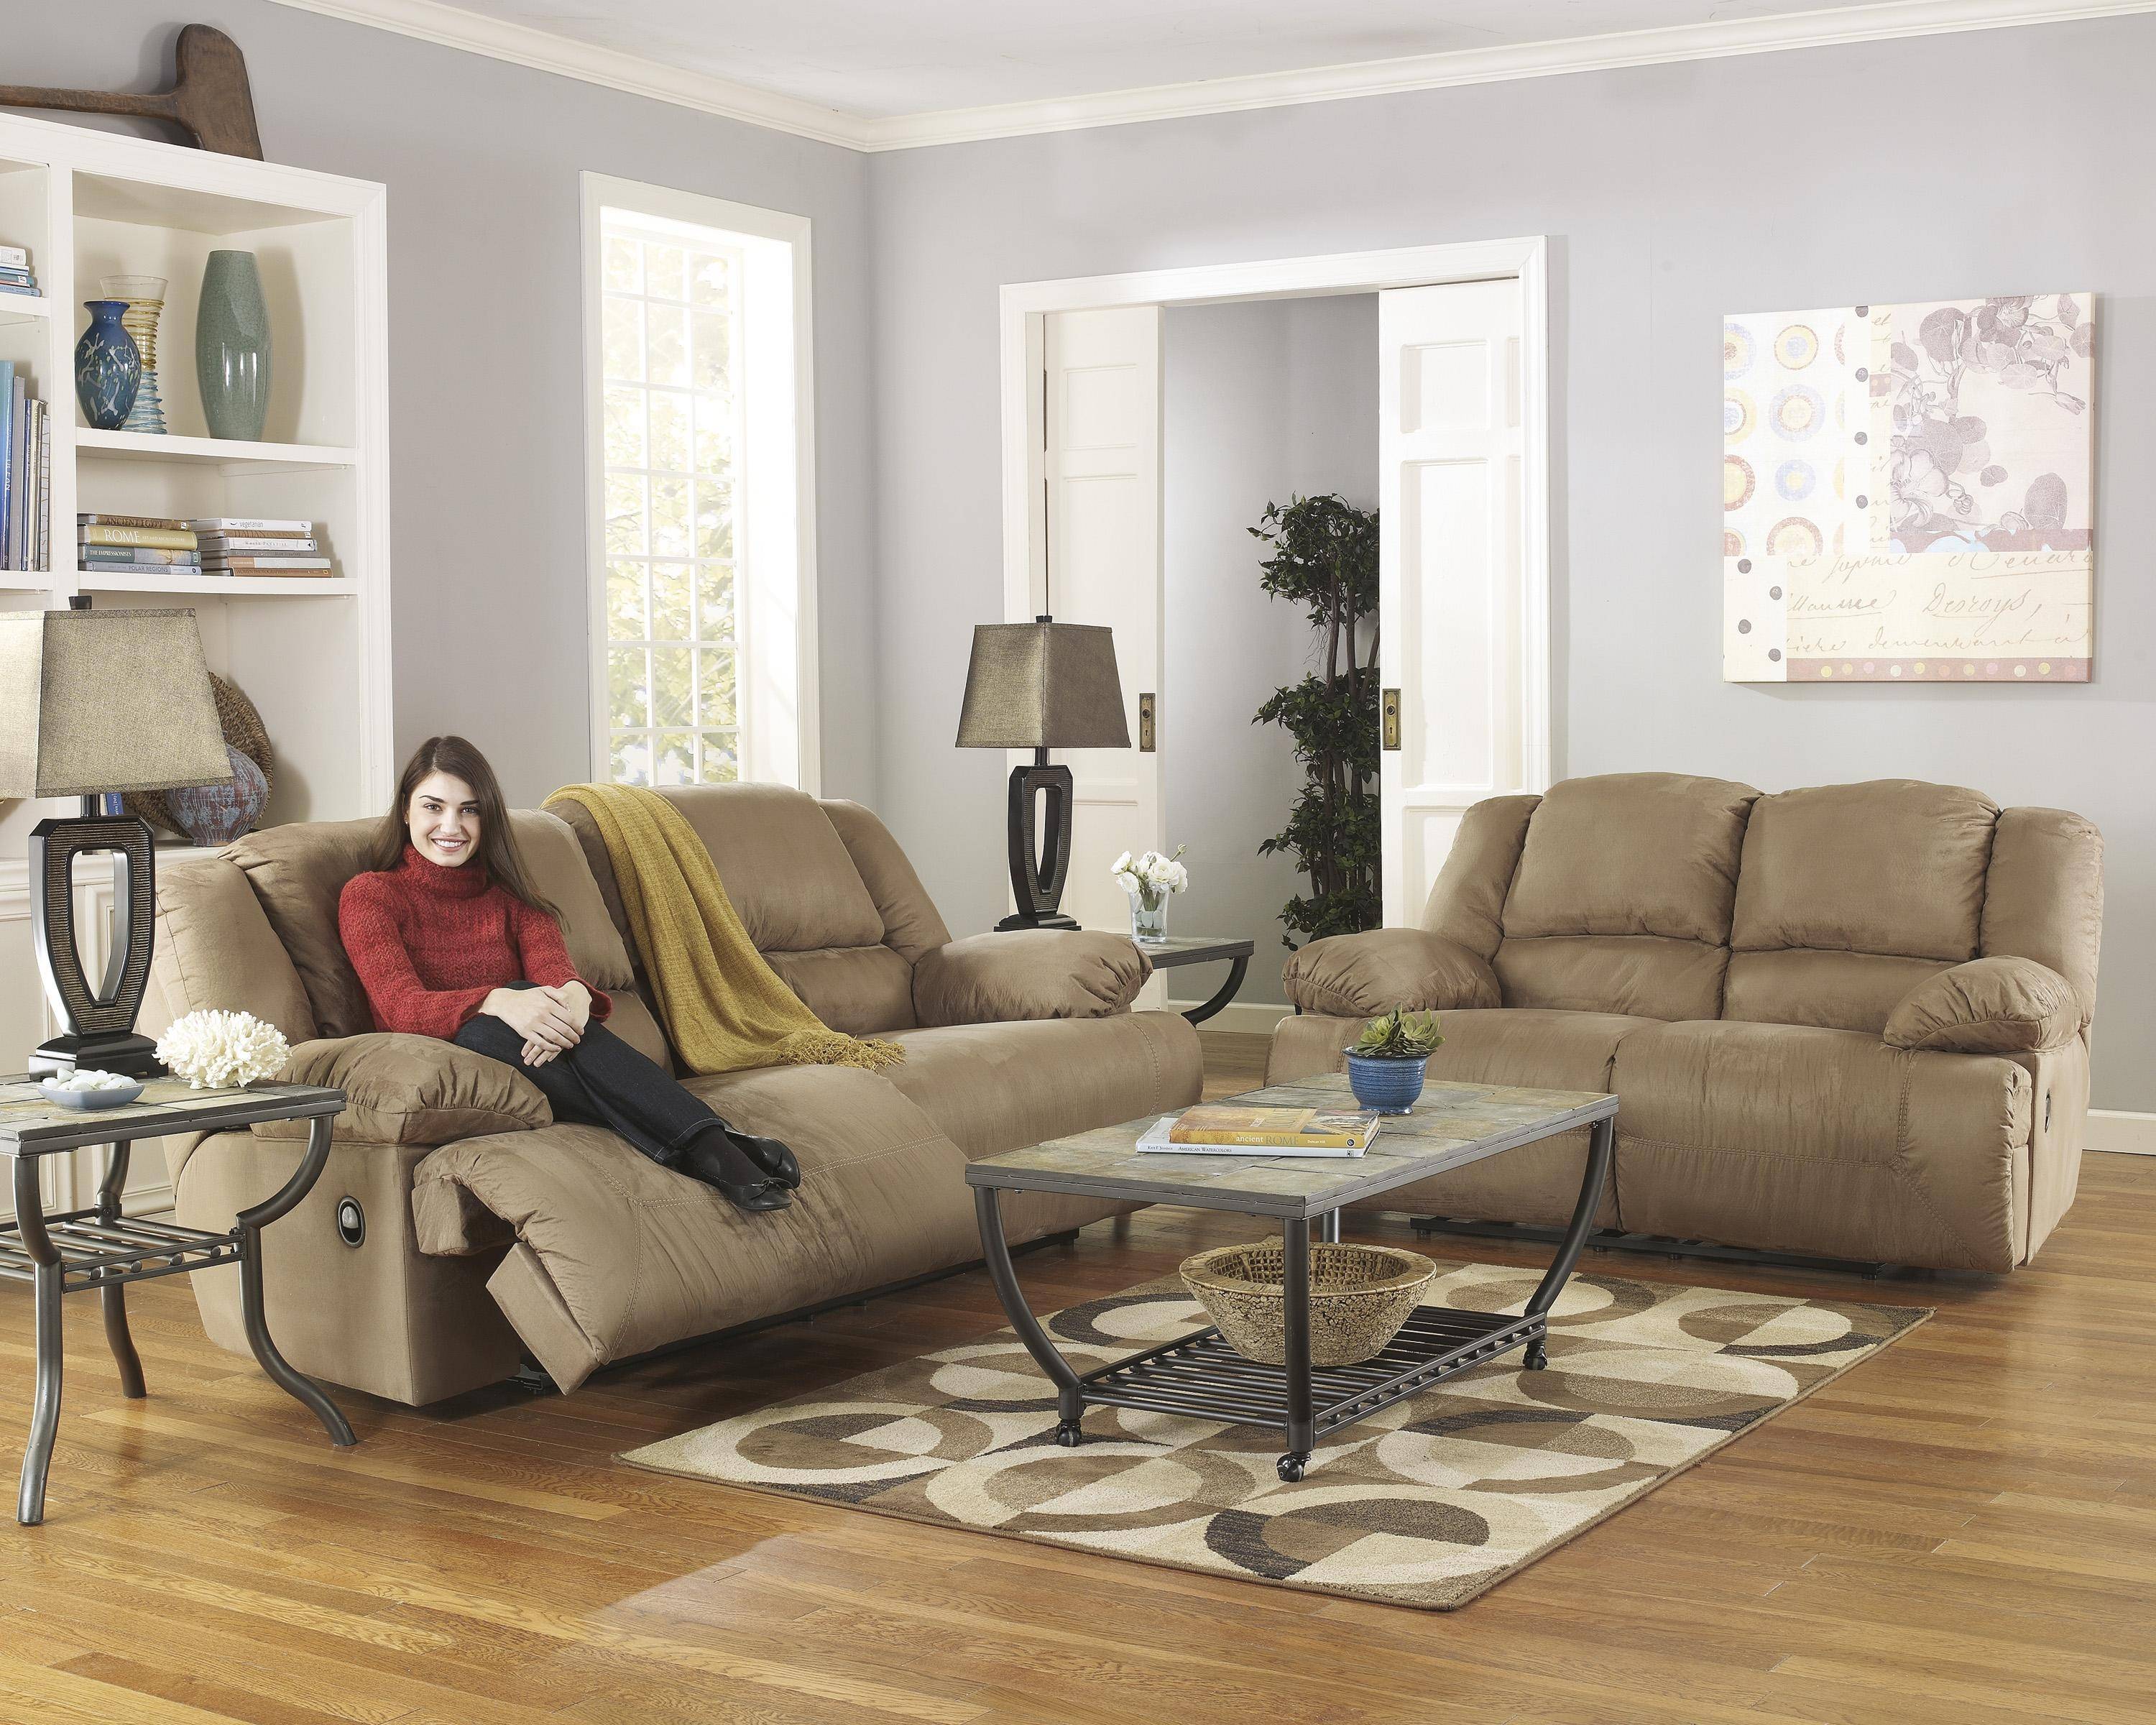 buy a living room set